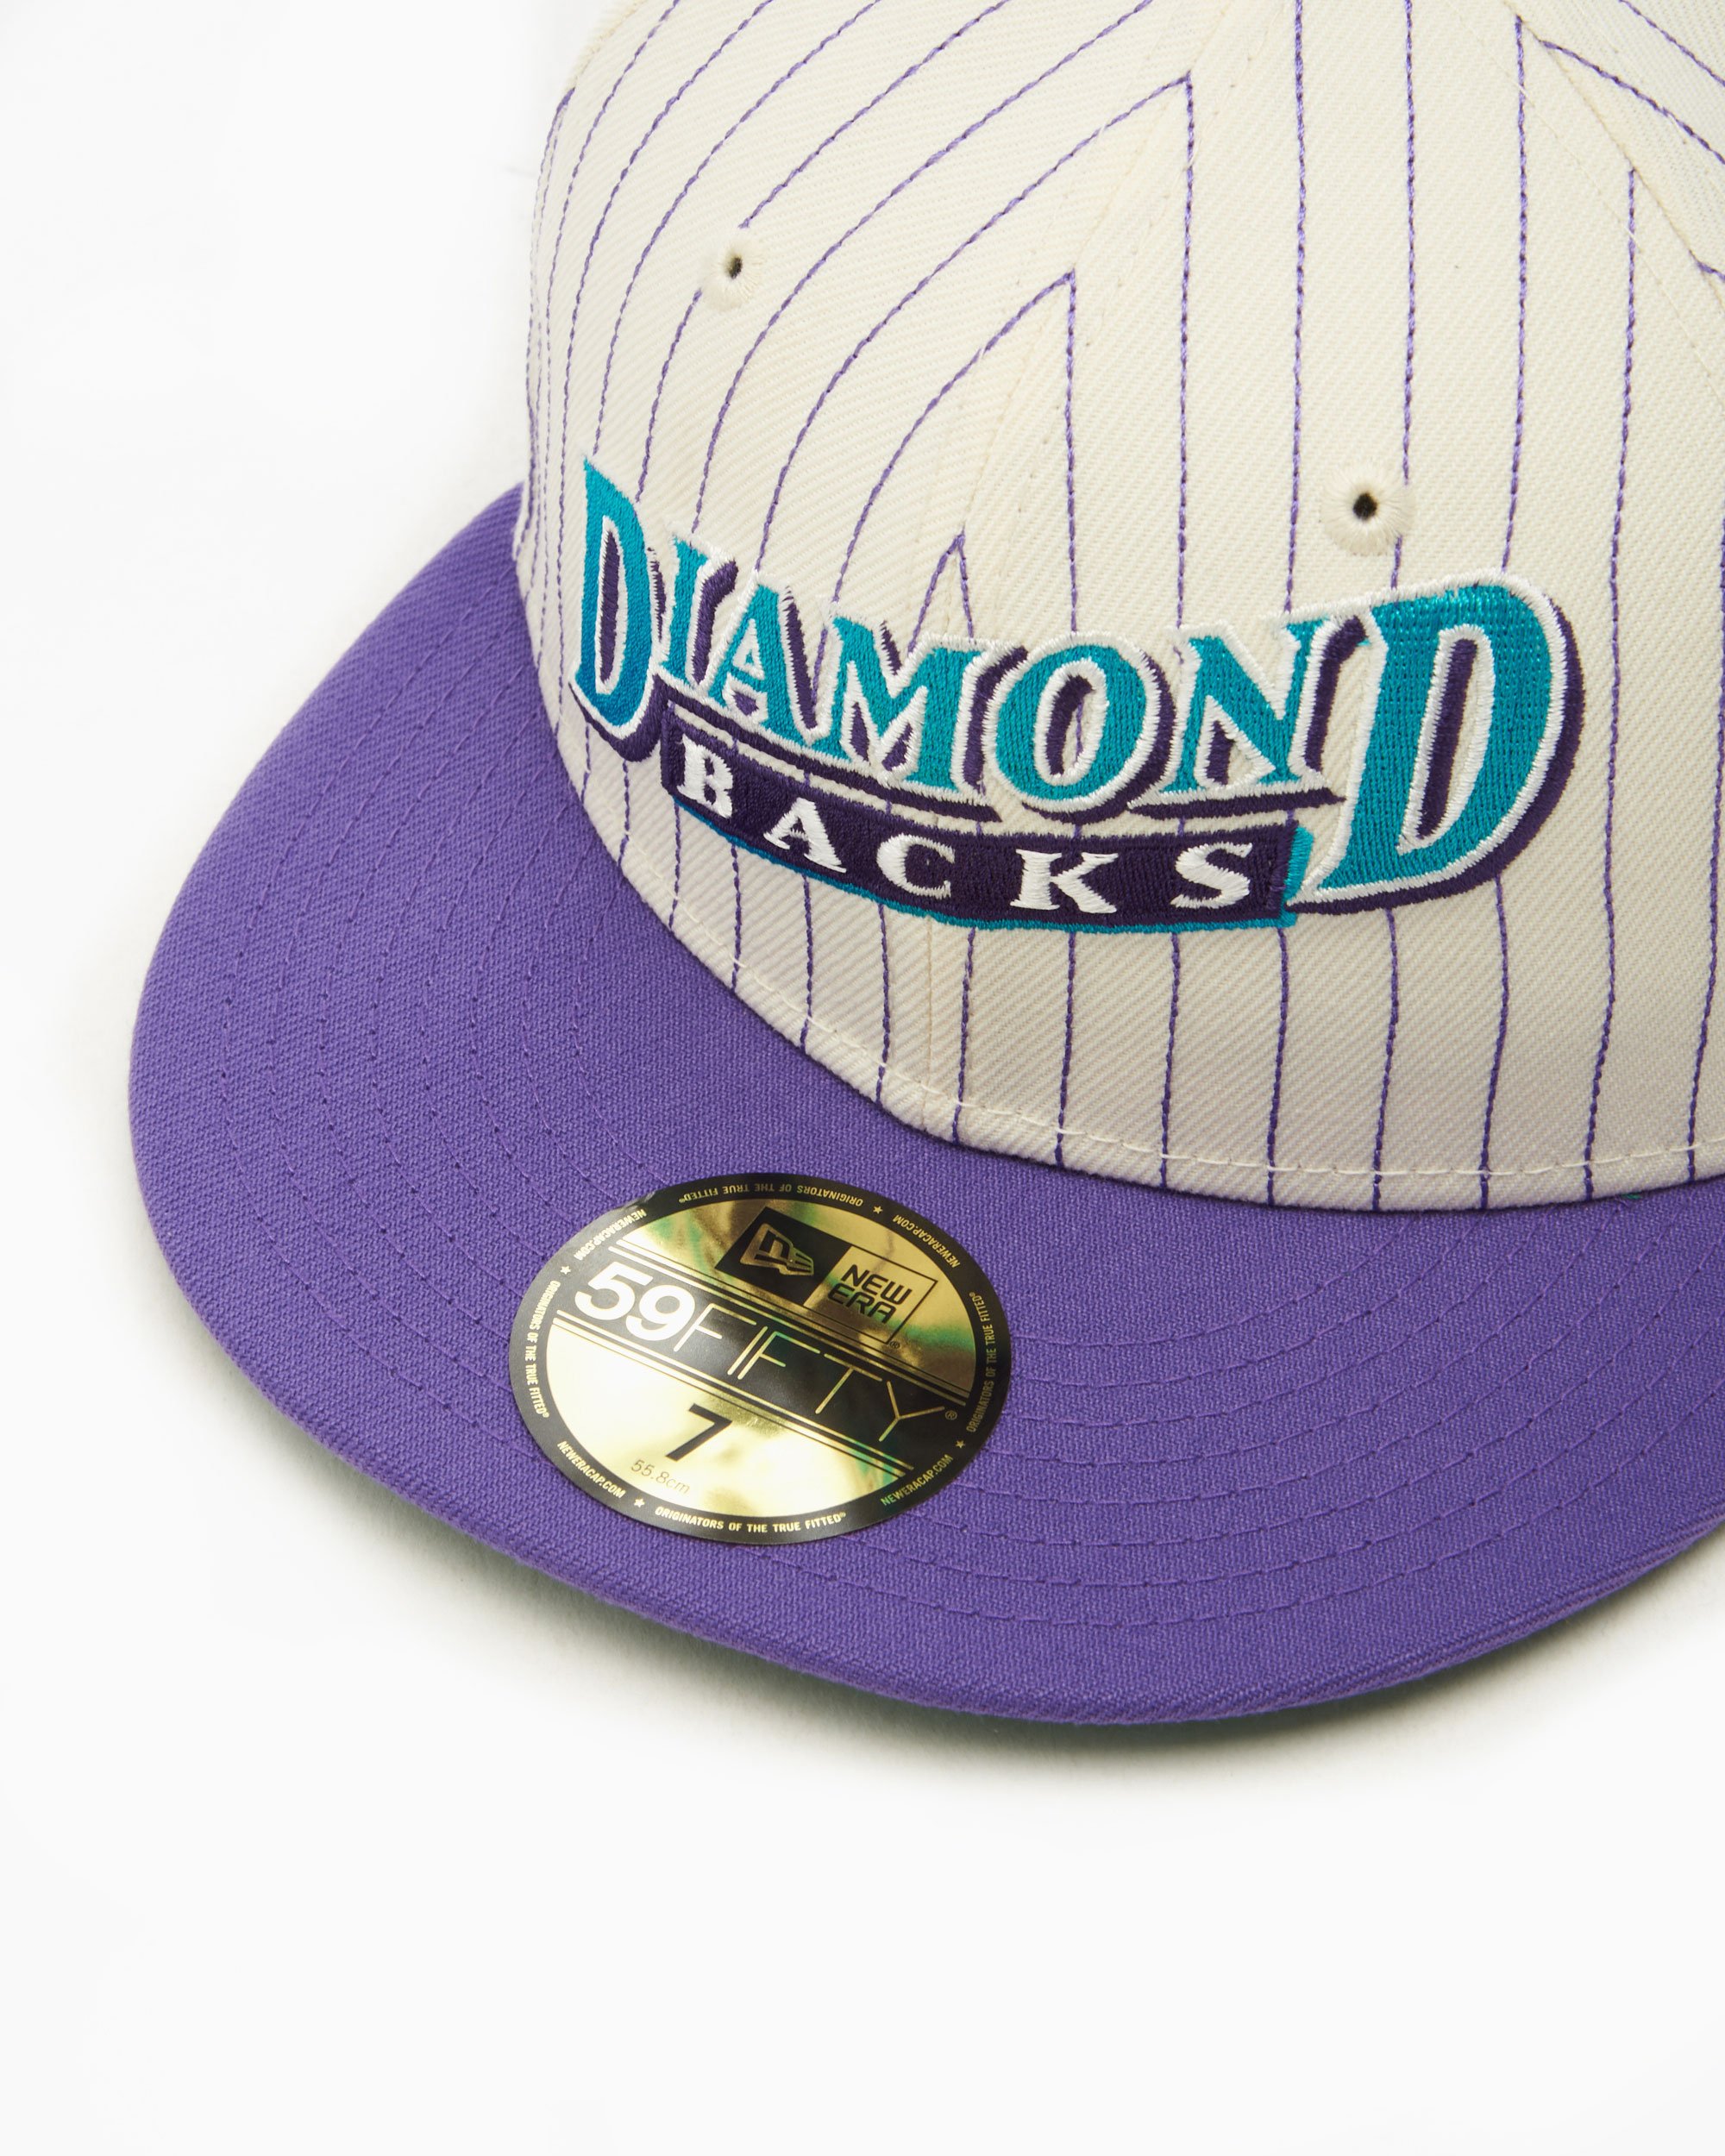 diamondbacks throwback hat